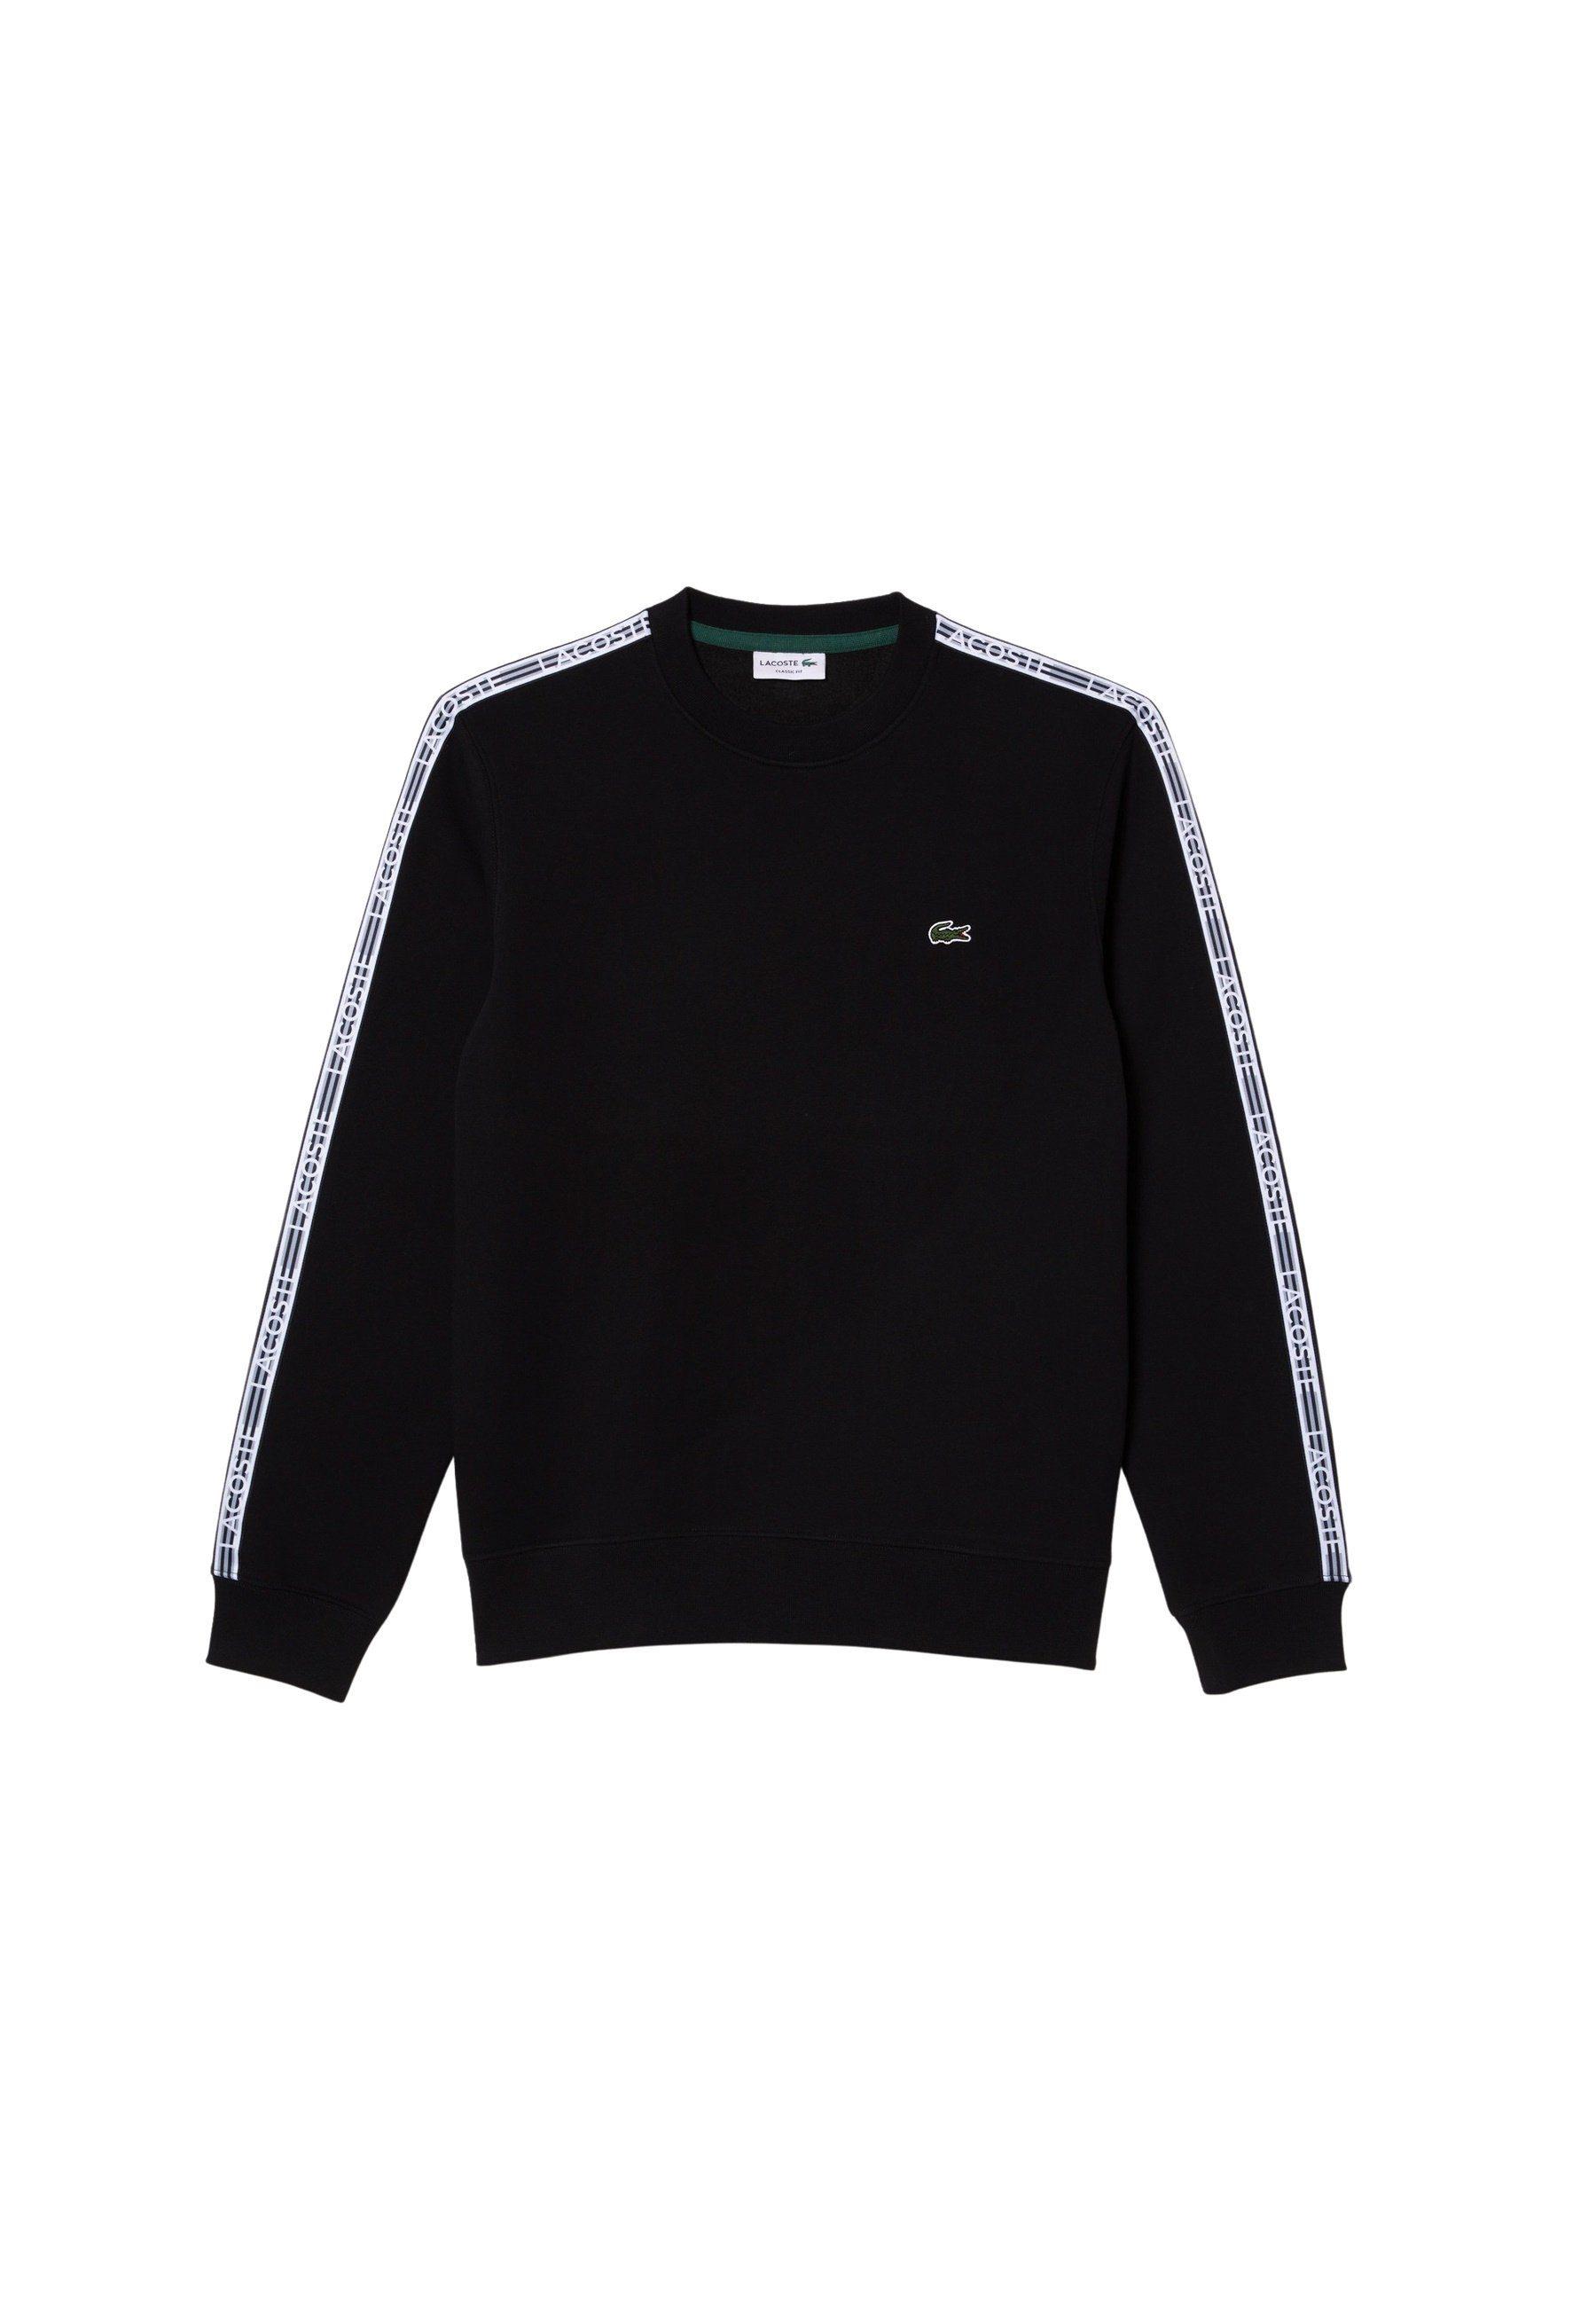 Lacoste Sweatshirt Pullover Sweatshirt mit Logostreifen 031 noir | Sweatshirts